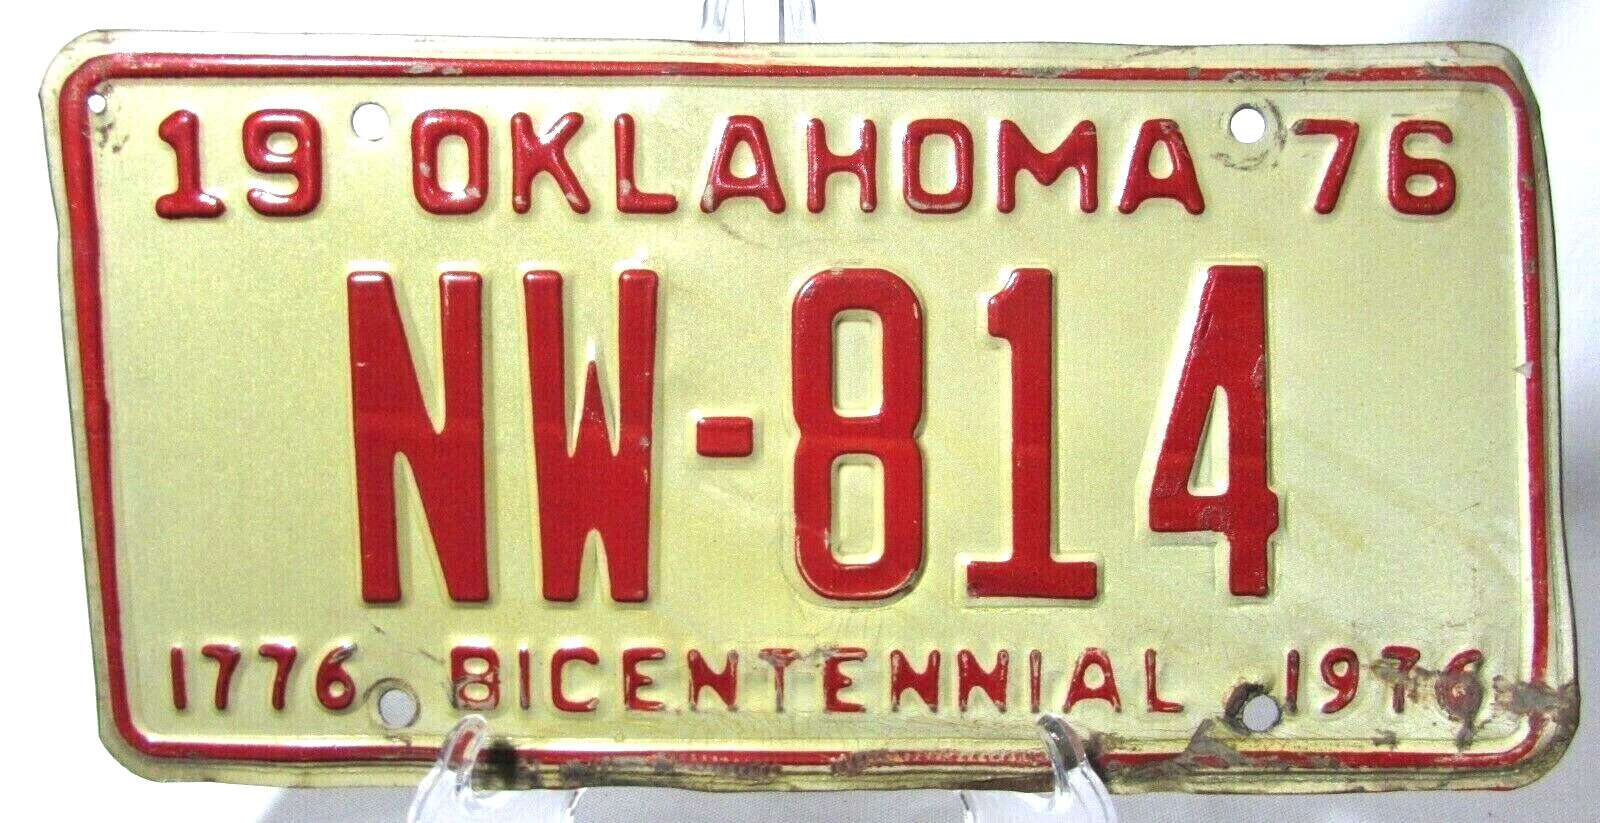 Vintage Oklahoma Bicentennial 1976 Car License Plate Tag NW 814 Nowata Retired